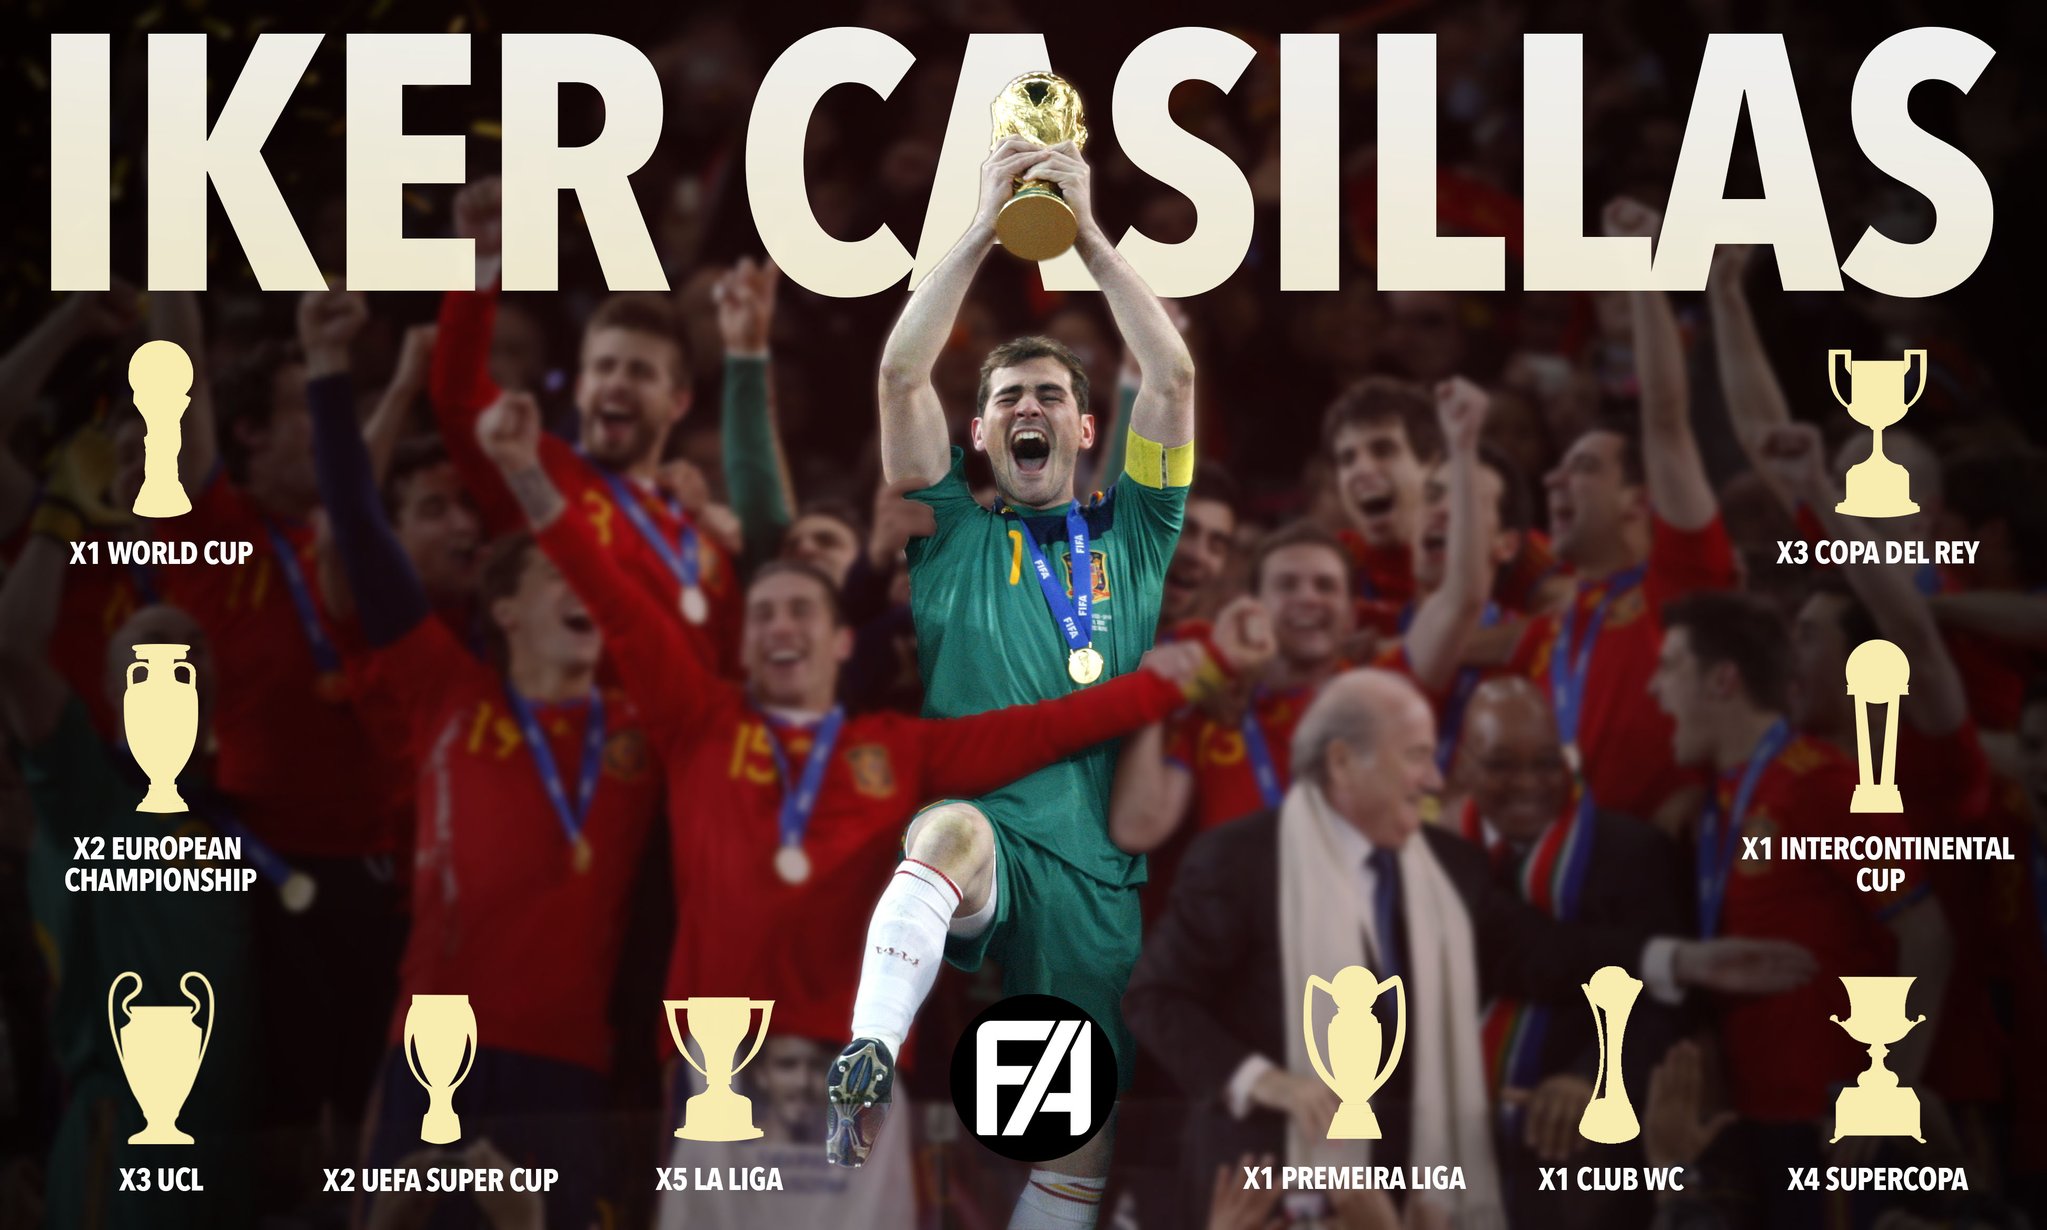 Happy 38th birthday to Iker Casillas! 

He\s won it all 